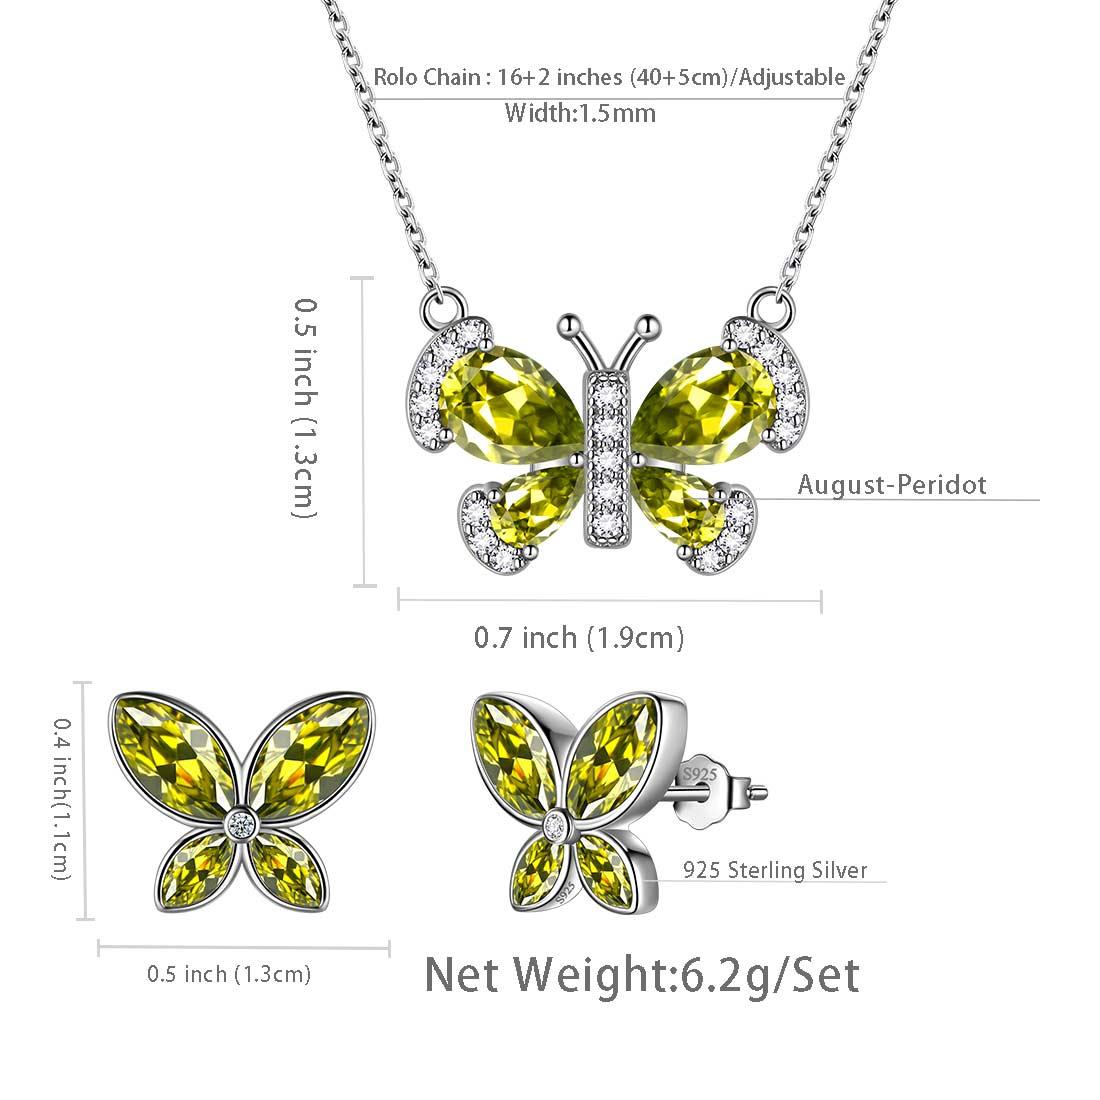 women butterfly jewelry sets 3pcs pendant necklaces stud earrings sterling silver ATDS0090 aurora tears jewelry August Peridot 4